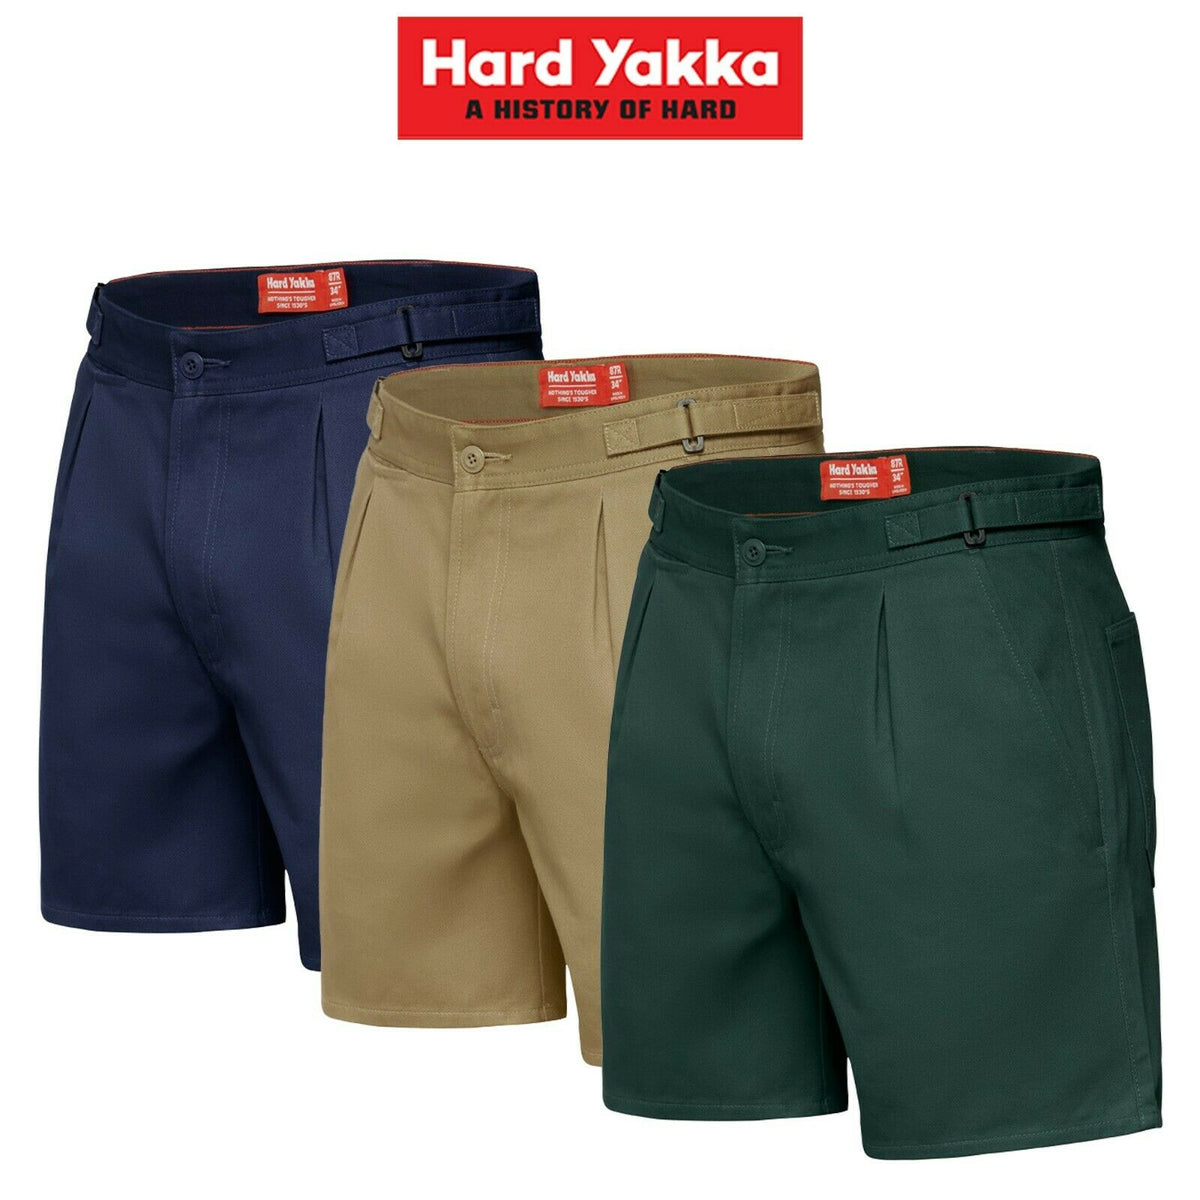 Hard Yakka Drill Short Side Tab Shorts Cotton Work Tough Trade Comfy Y05340